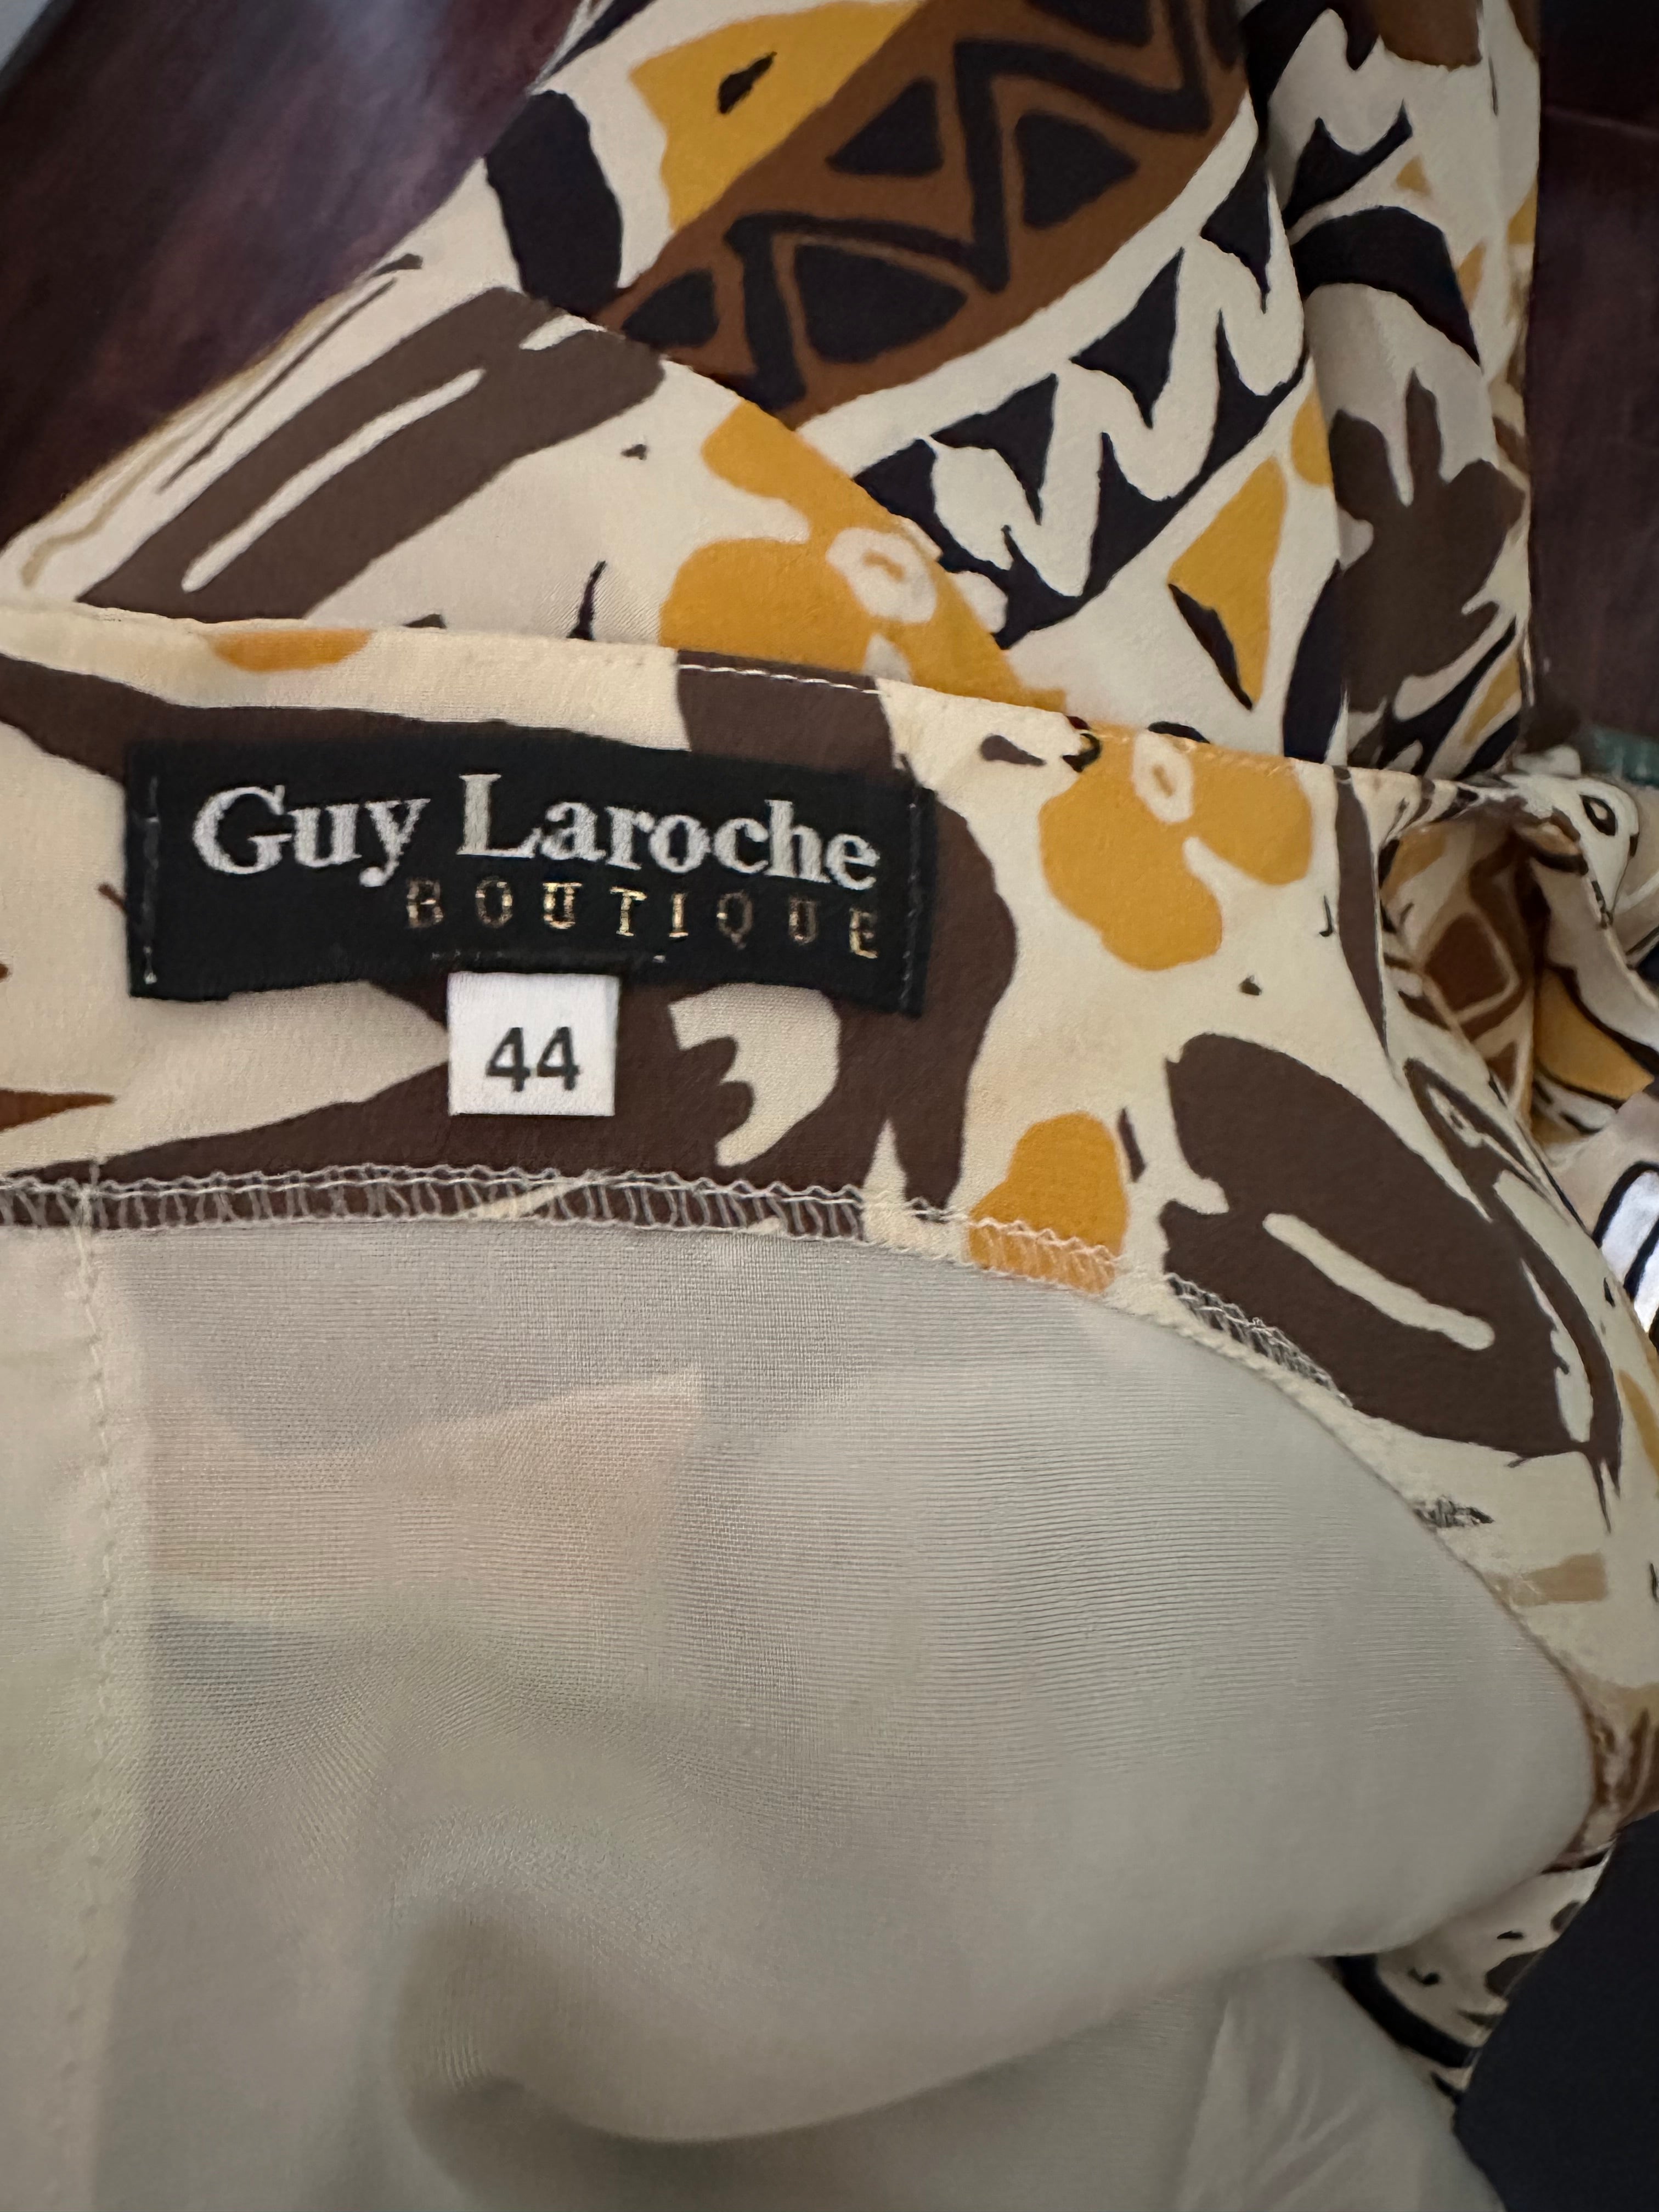 GUY LAROCHE Boutique Silk Summer Tailored Sheath Dress Authentic Vintage 80s